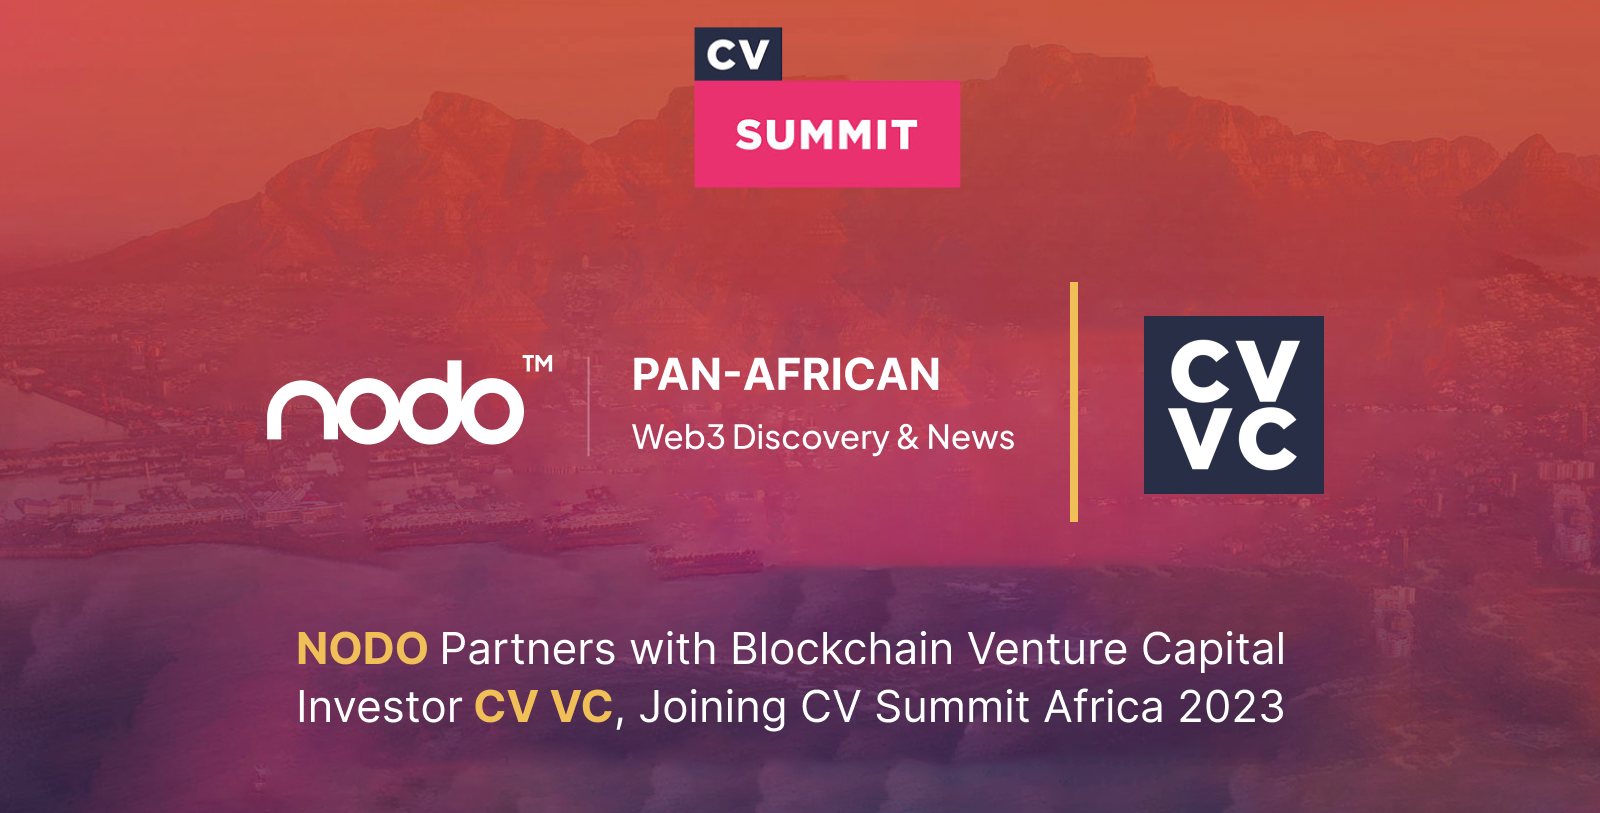 NODO Partners with Blockchain Venture Capital Investor CV VC, Joining CV Summit Africa 2023